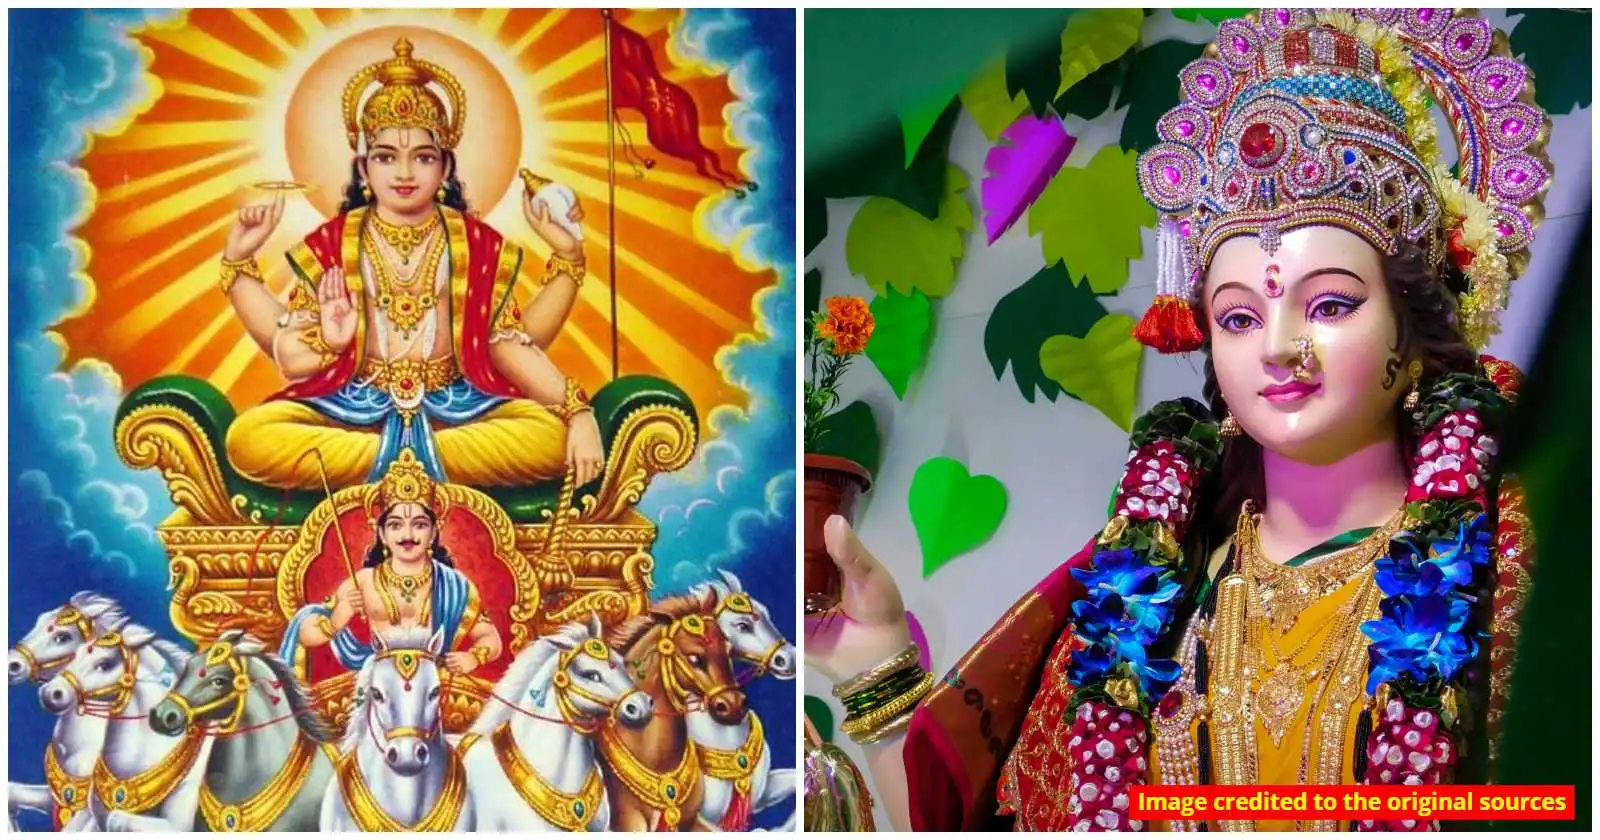 Surya Transit Horoscope Predictions in Kannada - Below the complete horoscope Predictions of Surya Transit (Surya Sankramana).